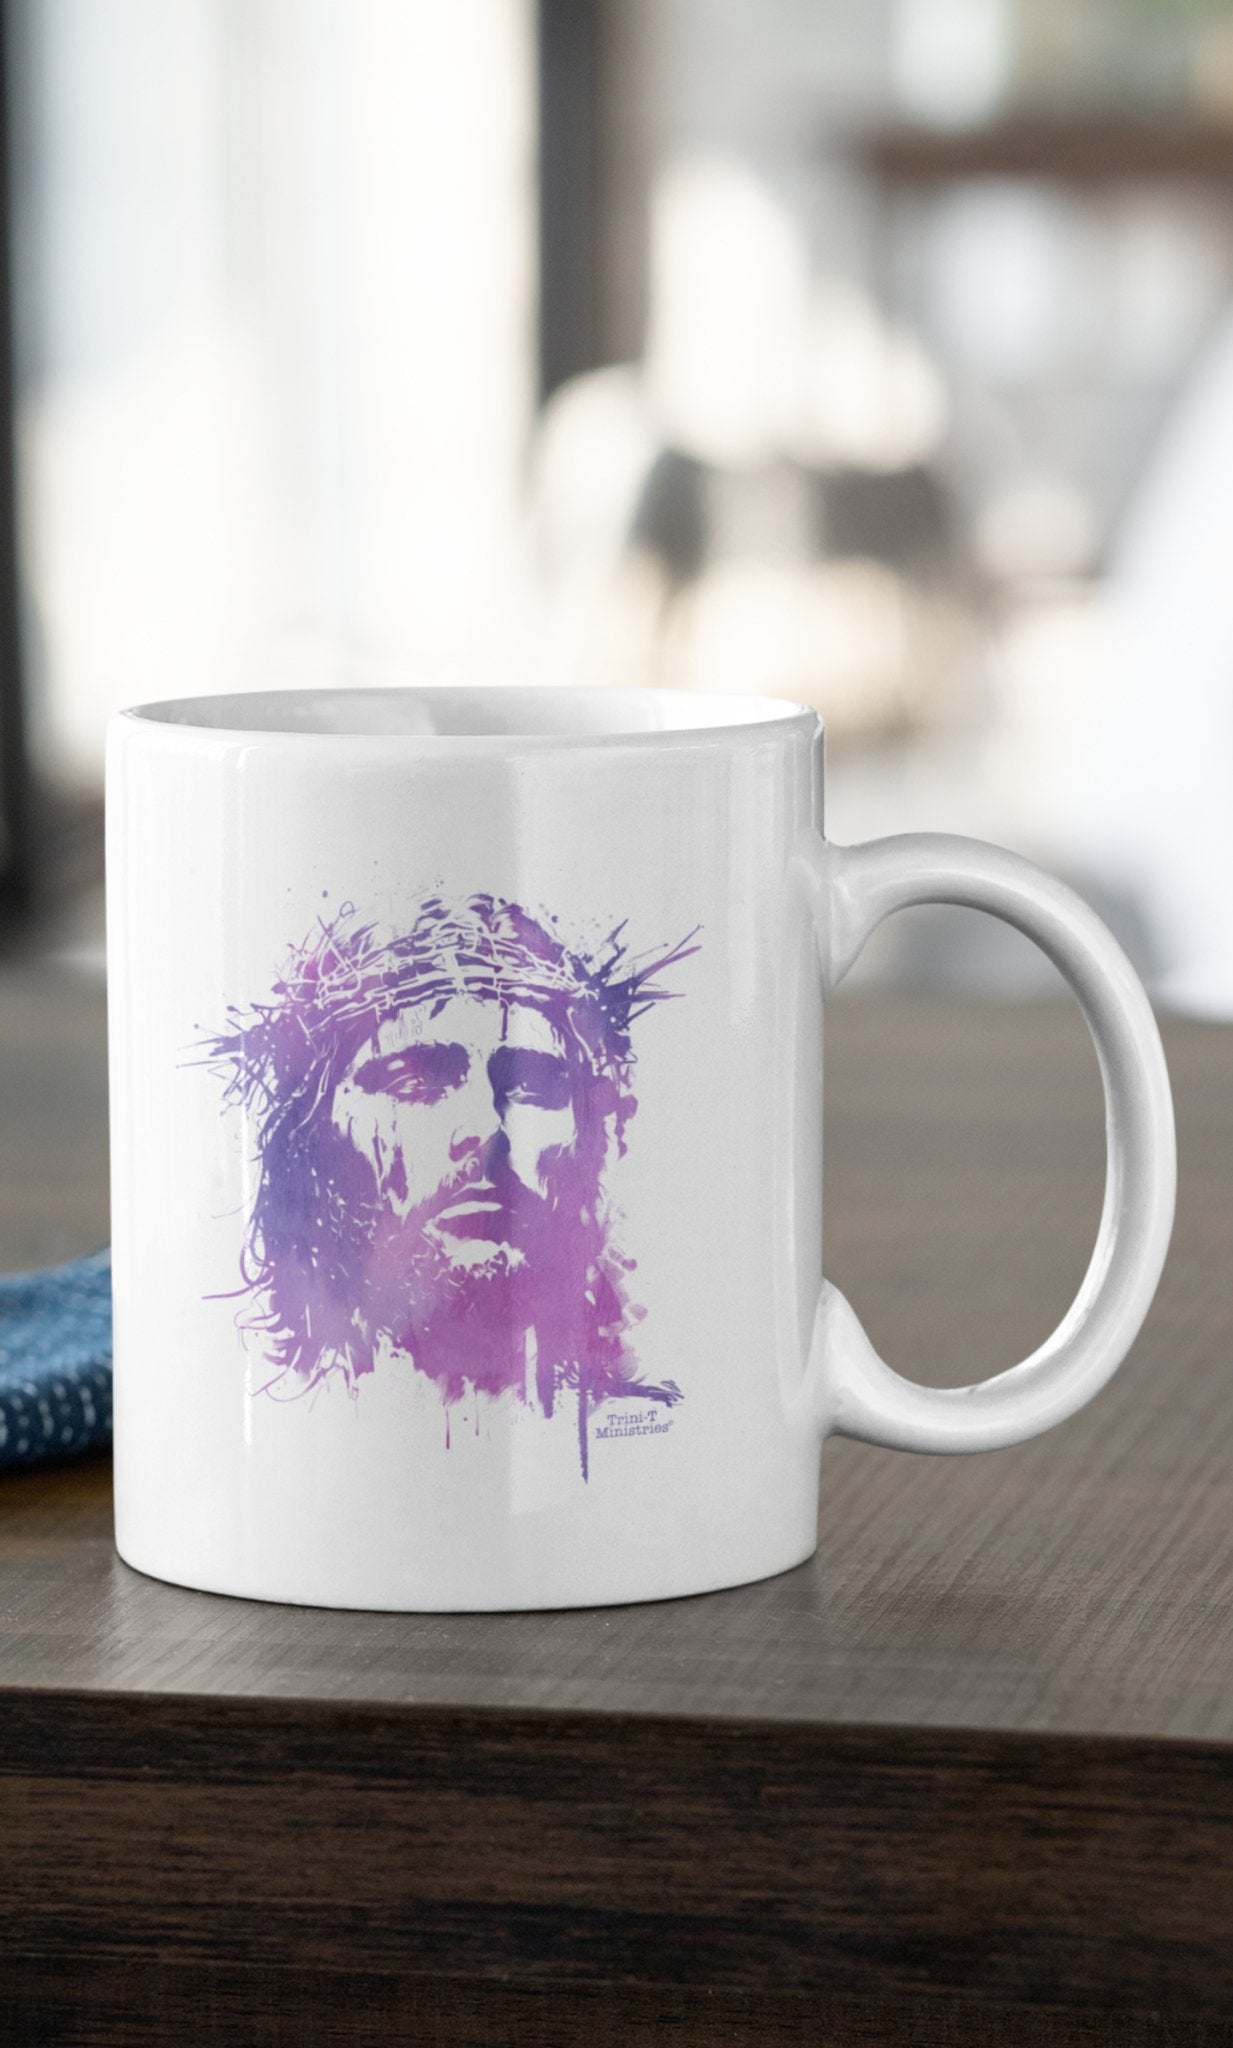 Jesus Crown of Thorns - Mug - Trini-T Ministries